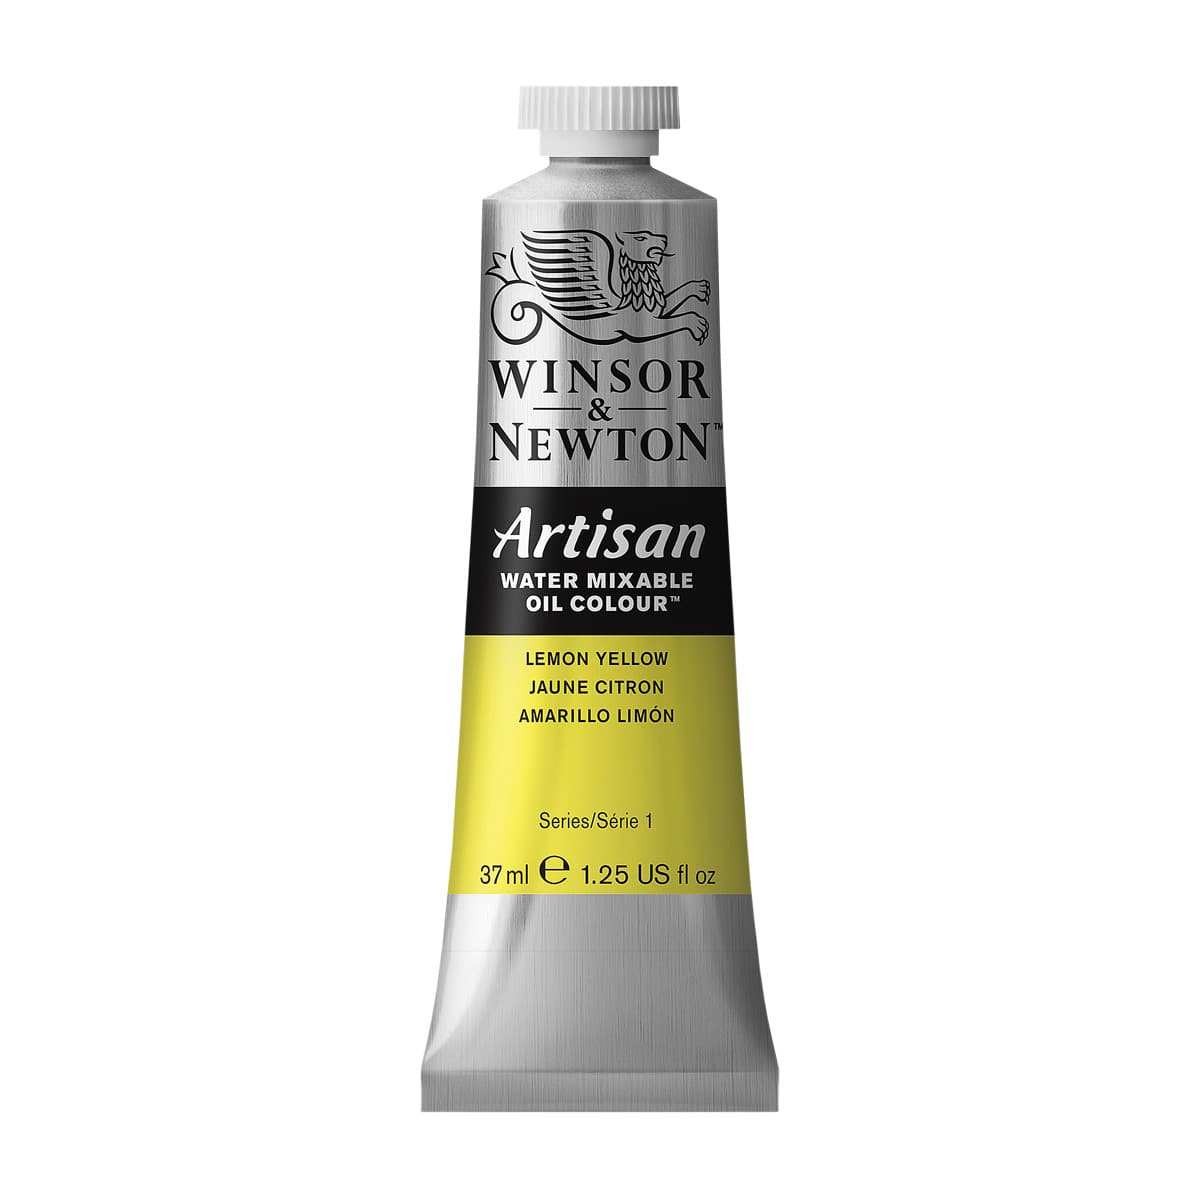 Winsor & Newton Artisan Water Mixable Oil Color – Rileystreet Art